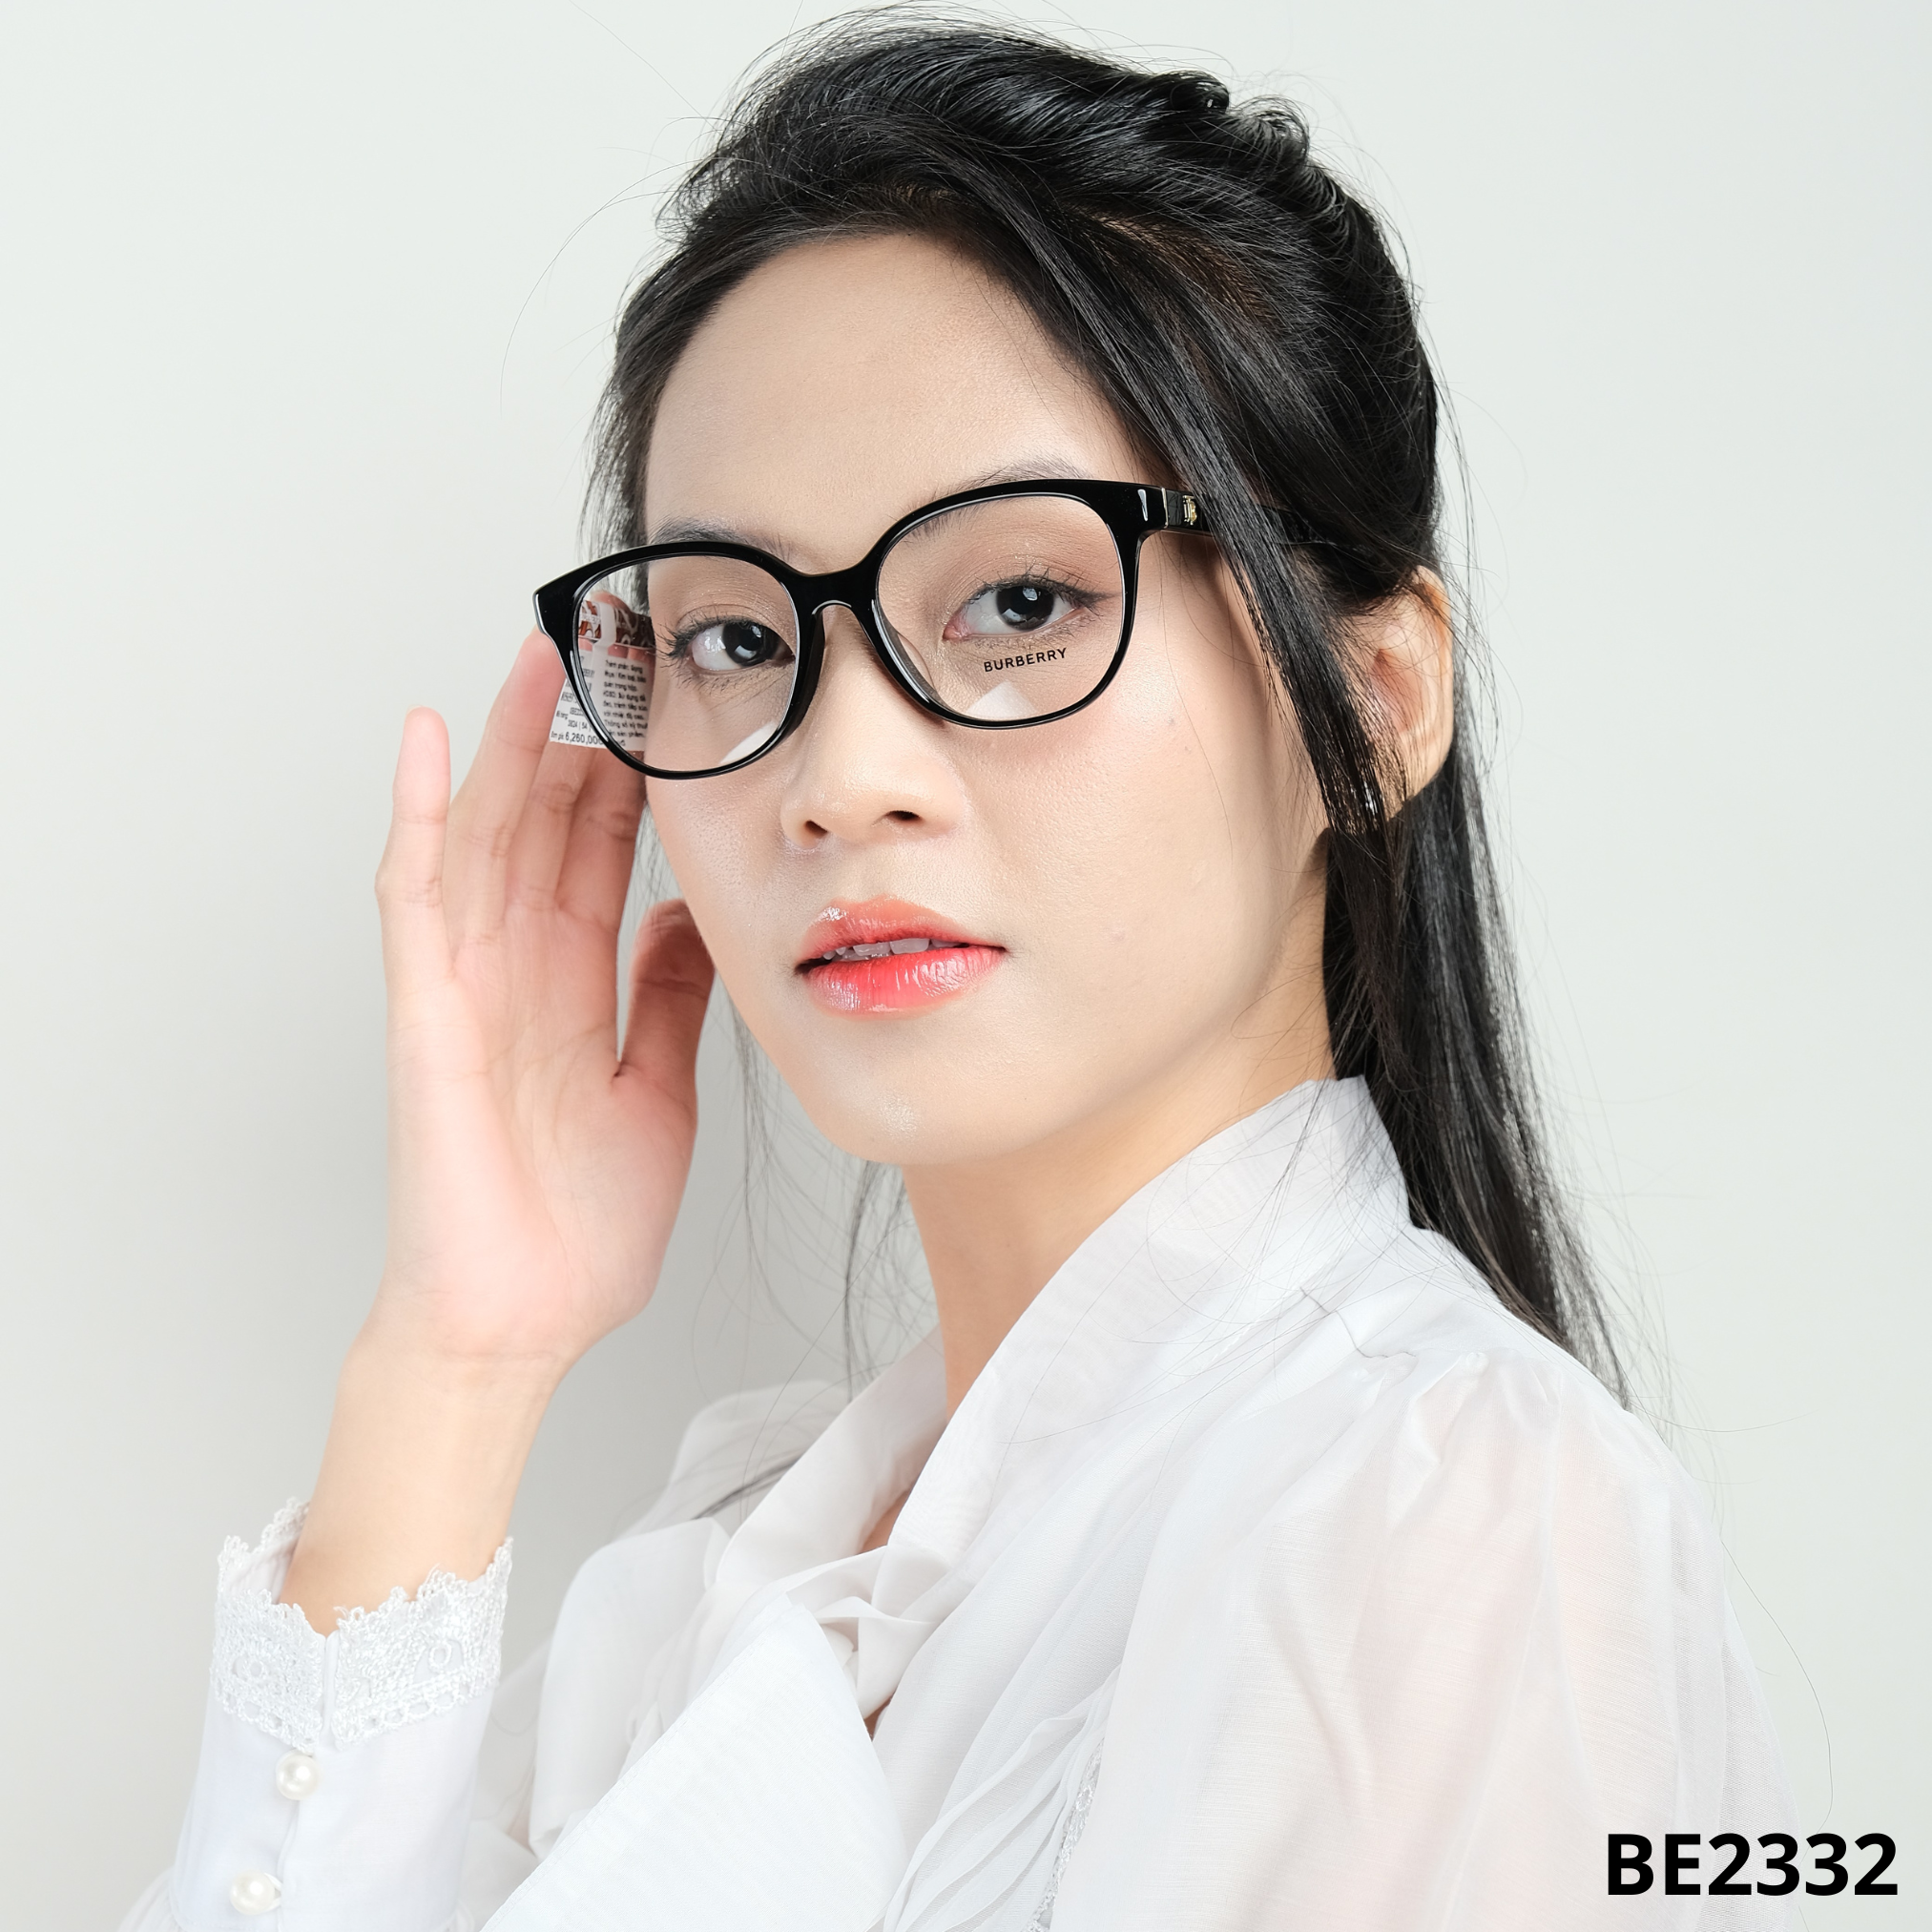  Burberry Eyewear - Glasses - 0BE2332F 